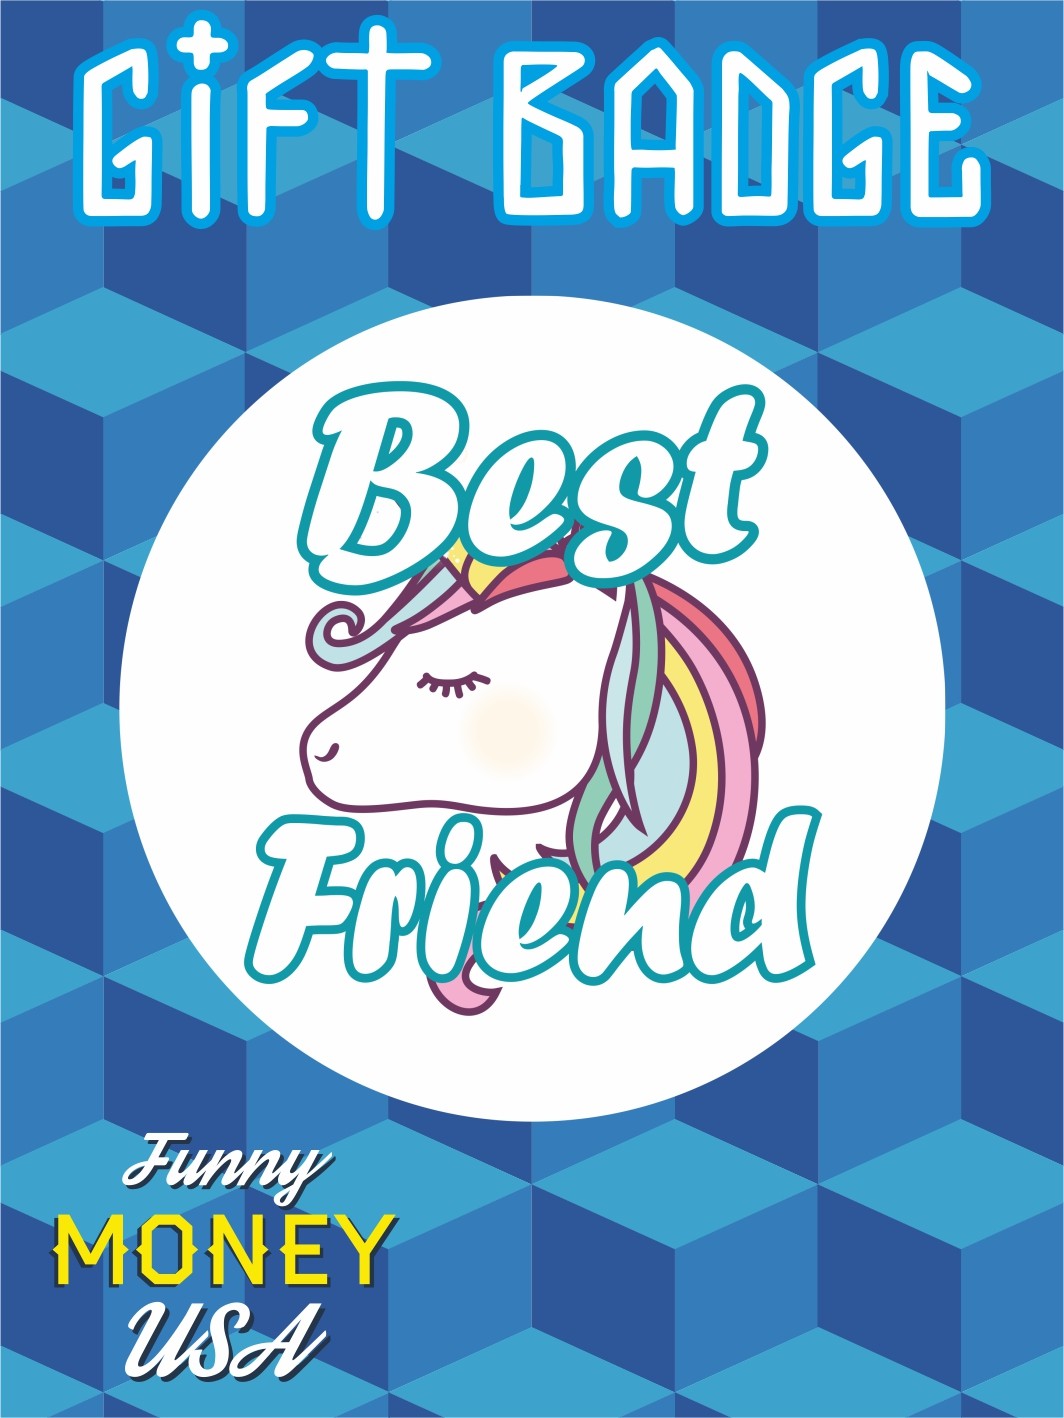 Gift badges "Best friend"